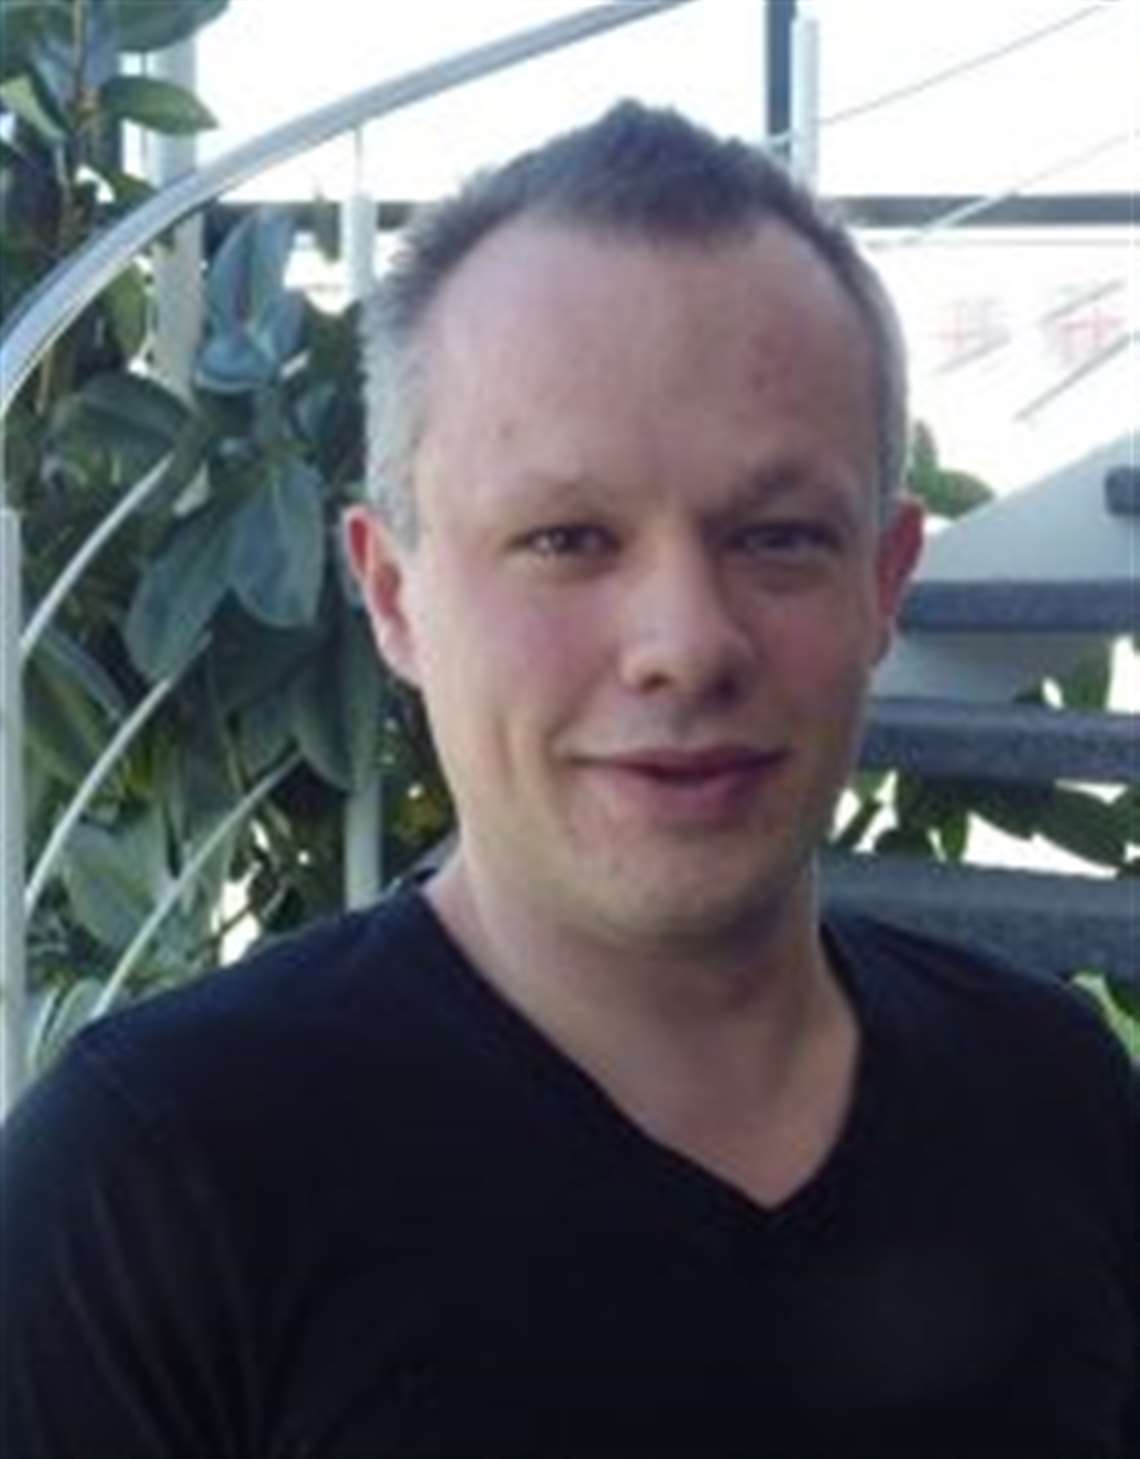 Moritz Dickmann, Nöpel Group managing director, in black shirt